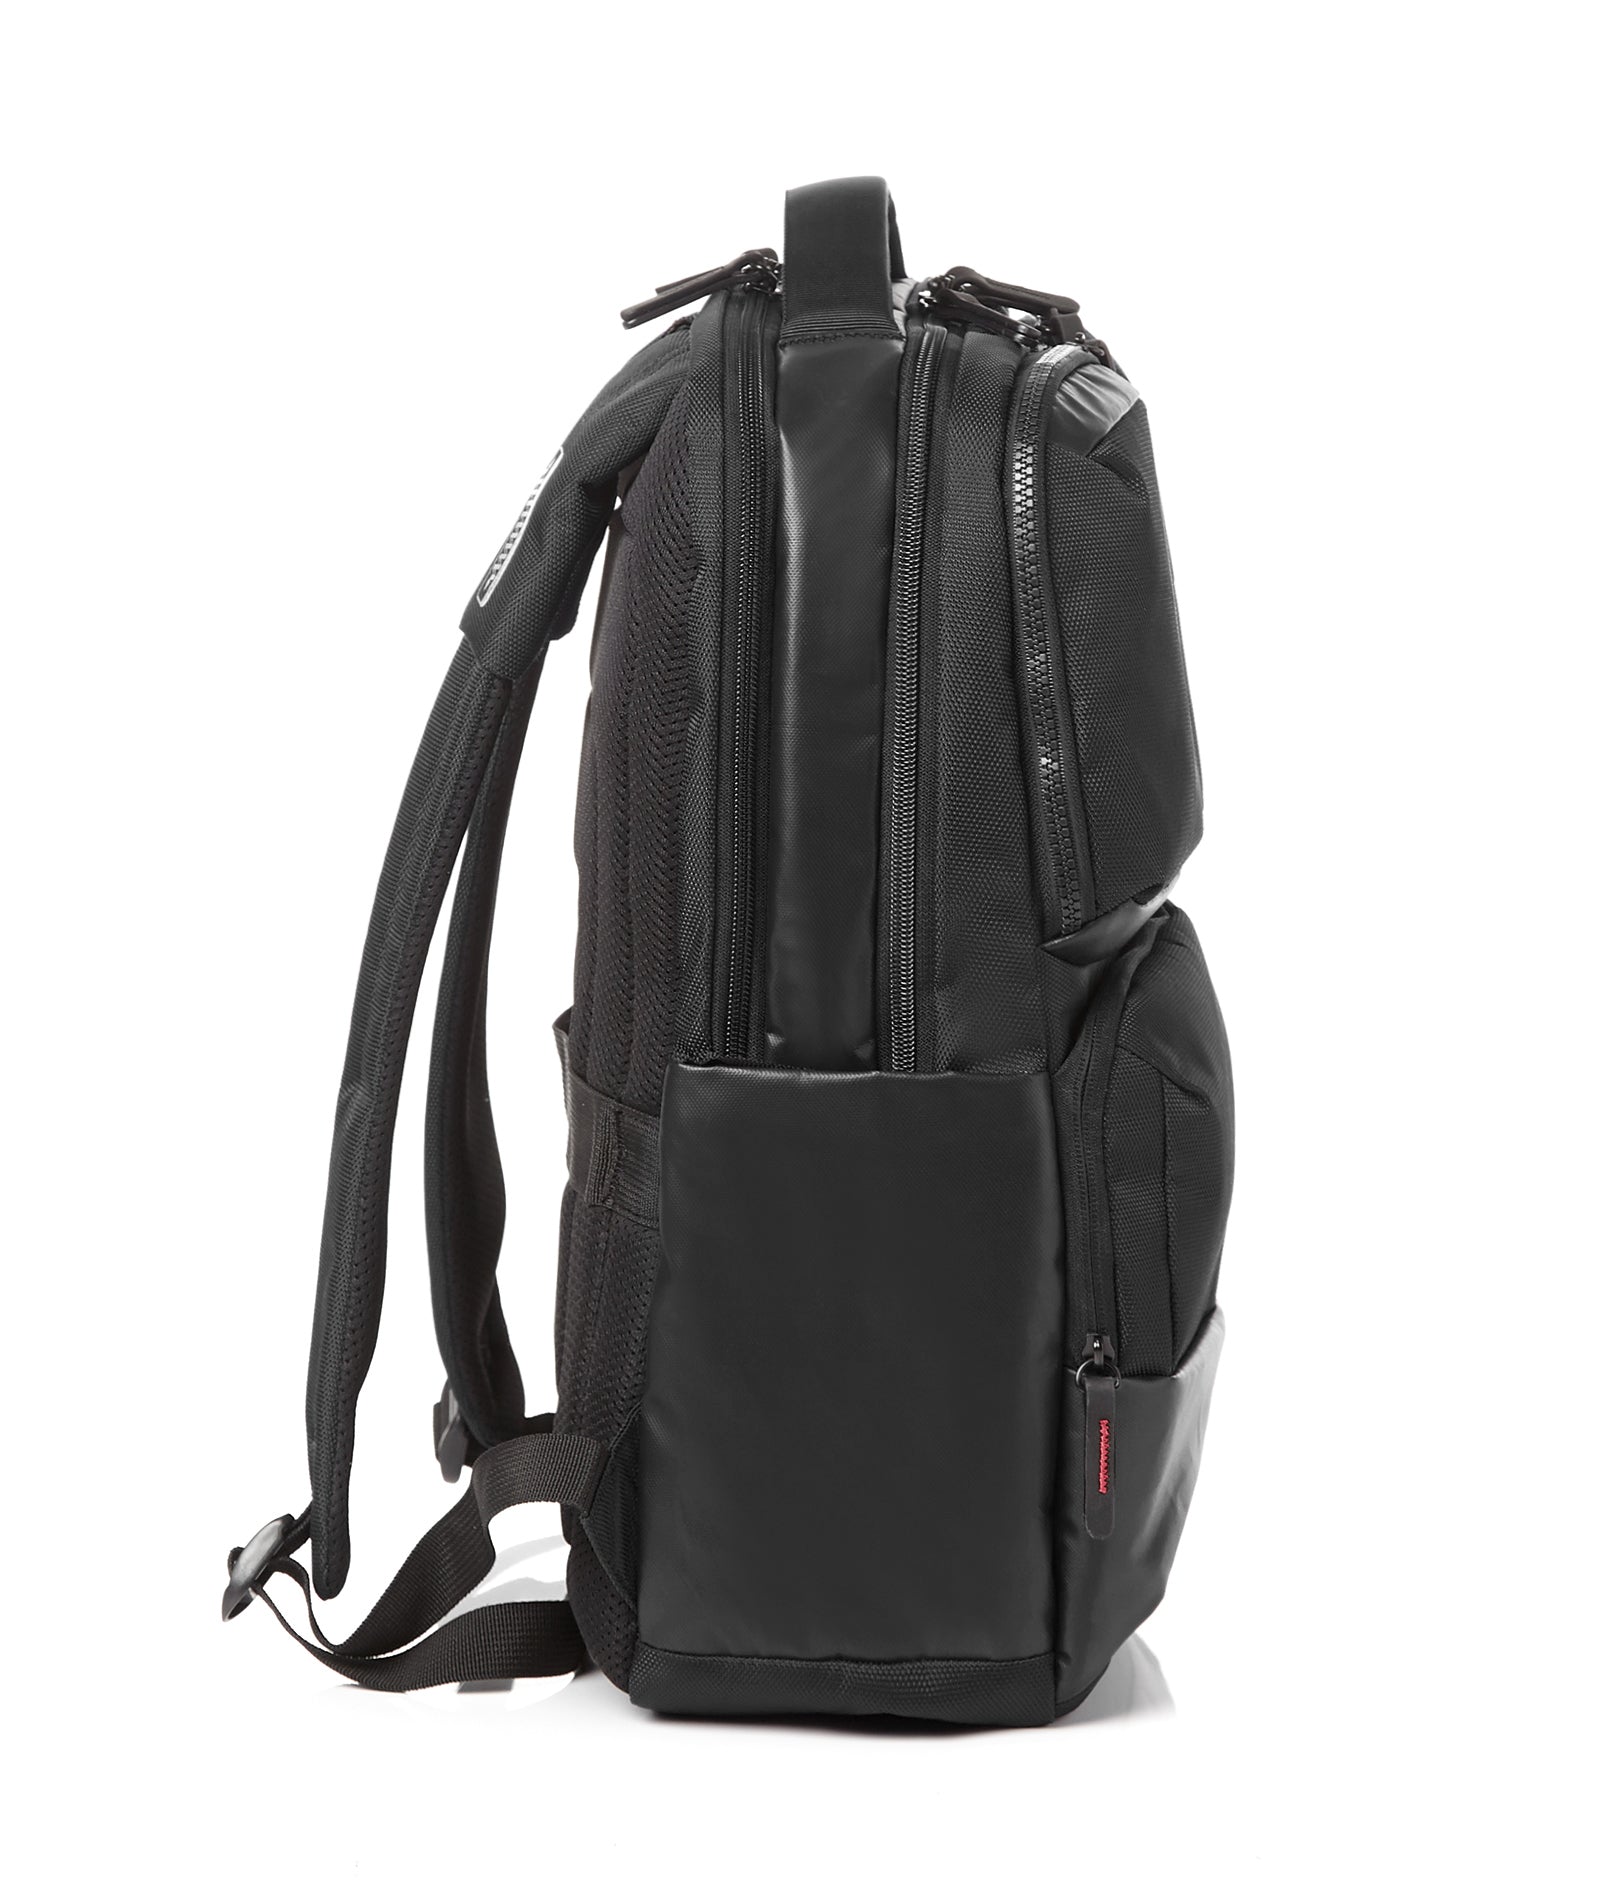 American Tourister - ZORK Backpack 2 AS - Black-5